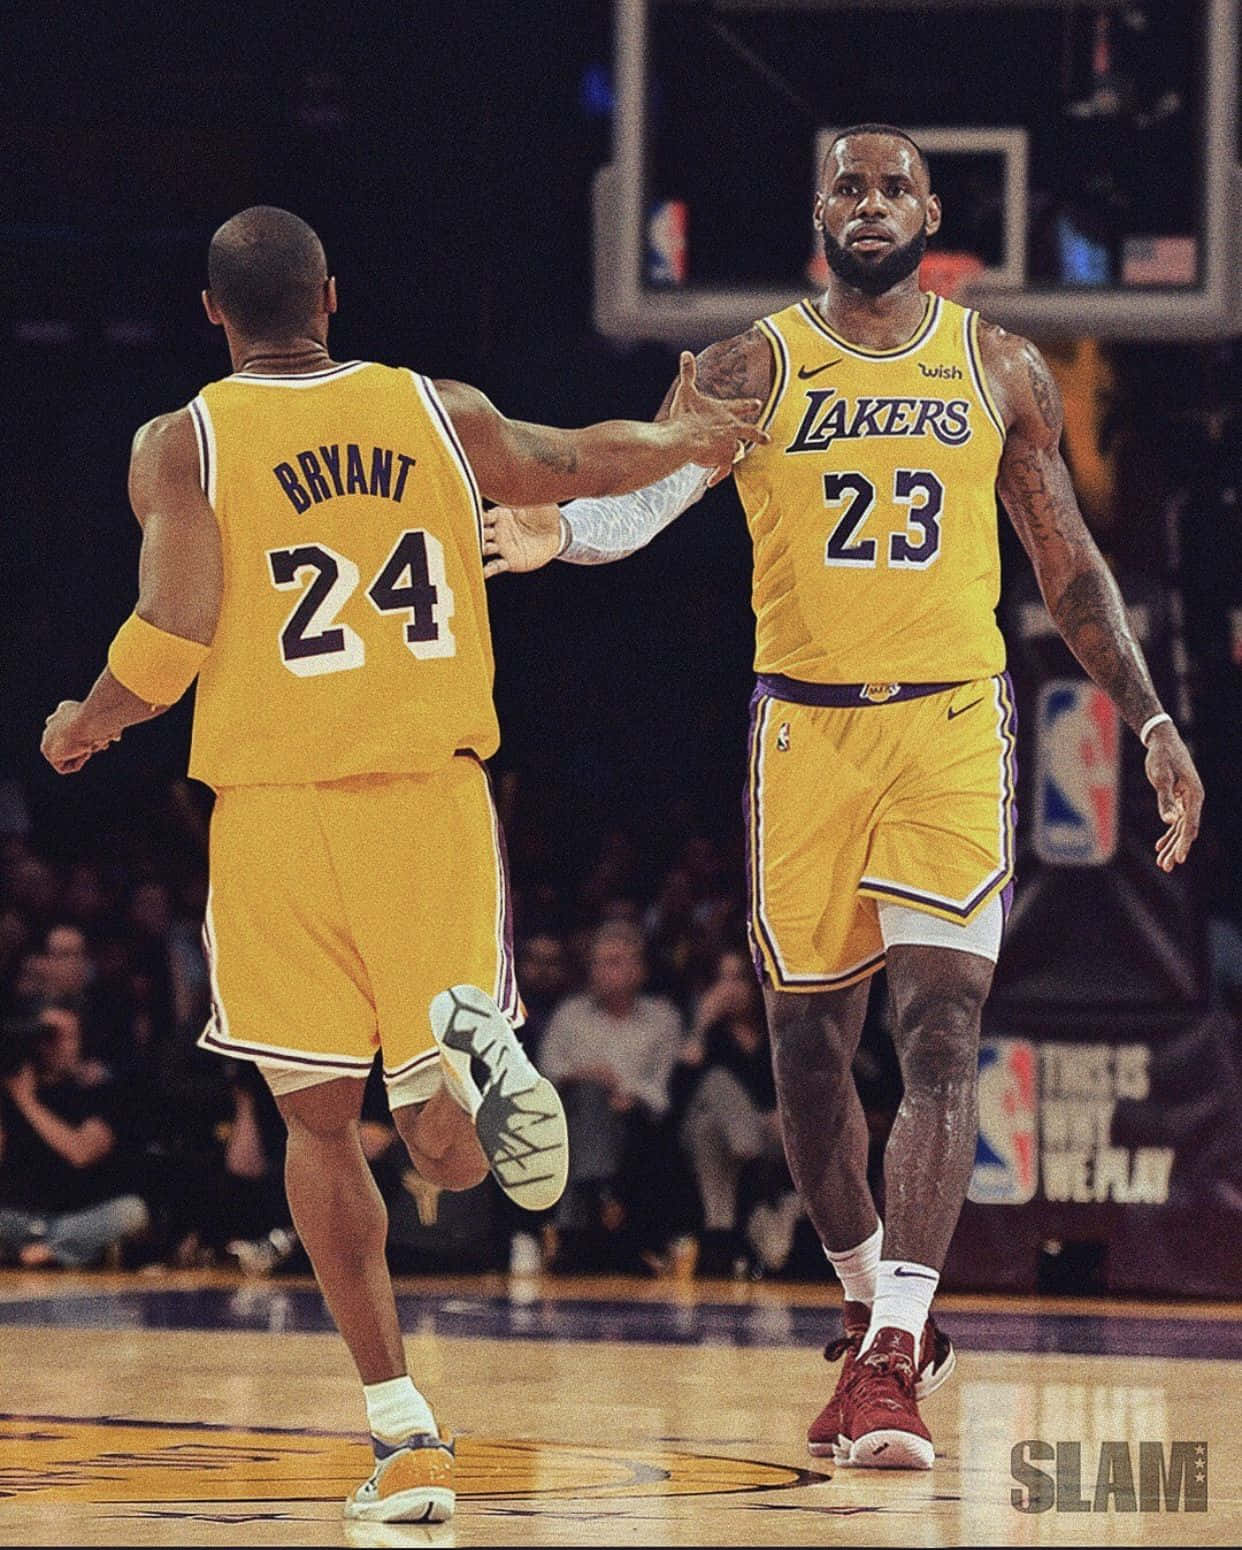 Kobebryant Iført Sin Los Angeles Lakers-trøje Under En Kamp.